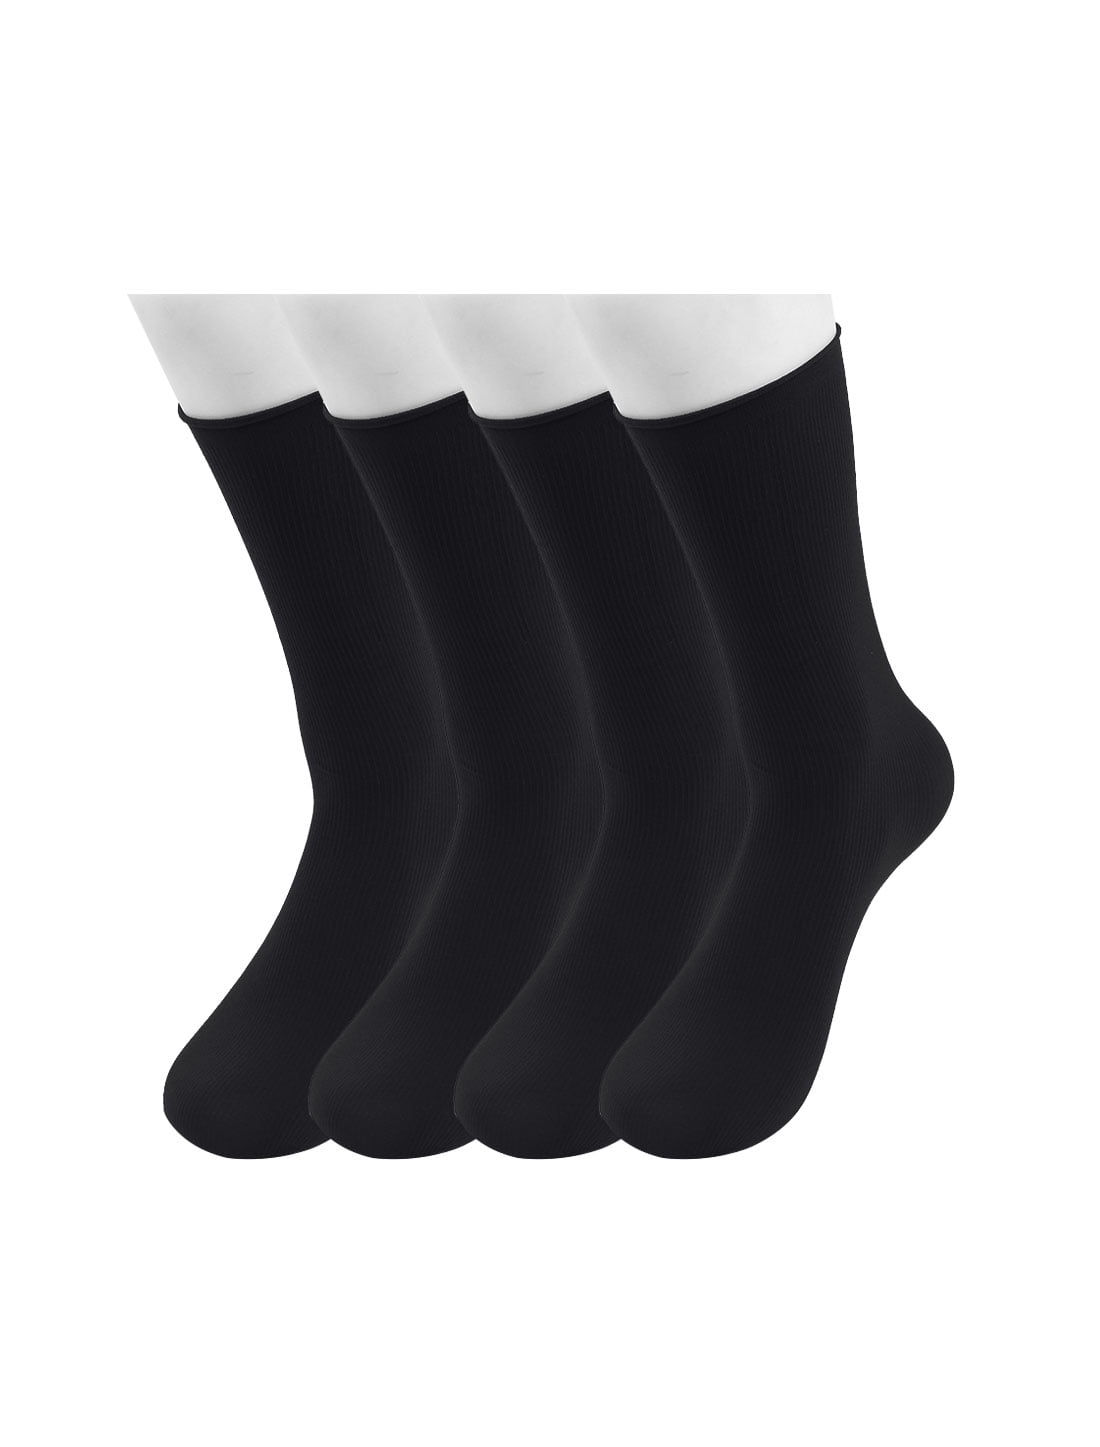 Women Elastic Cuffs Stretchy Ankle High Socks 2 pairs Black 9-11 ...